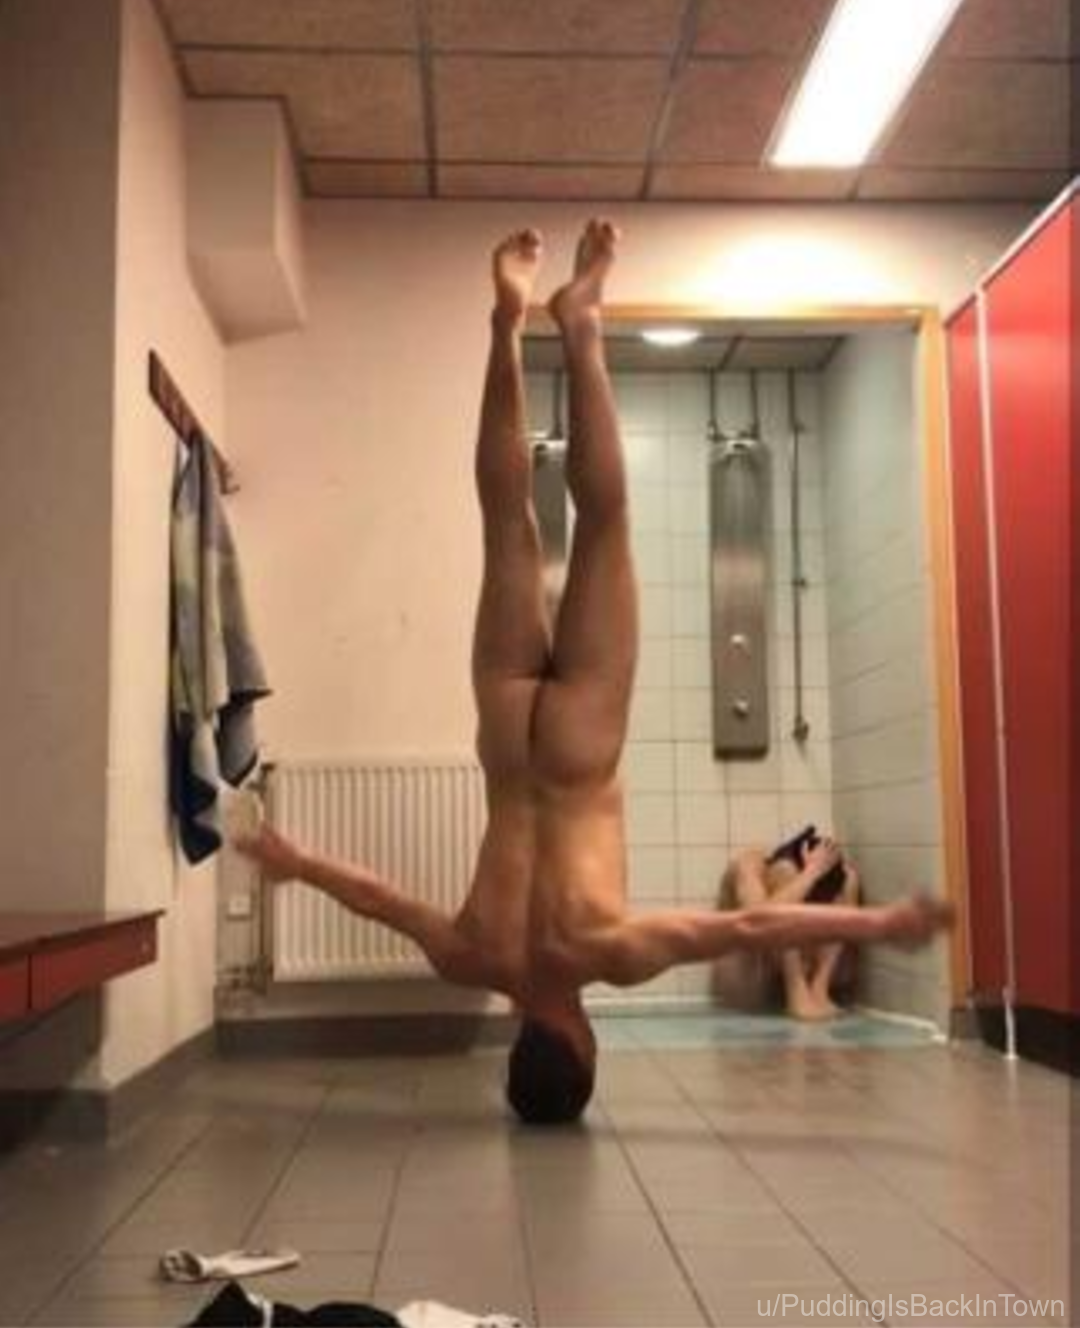 basudev sapkota add photo naked man upside down